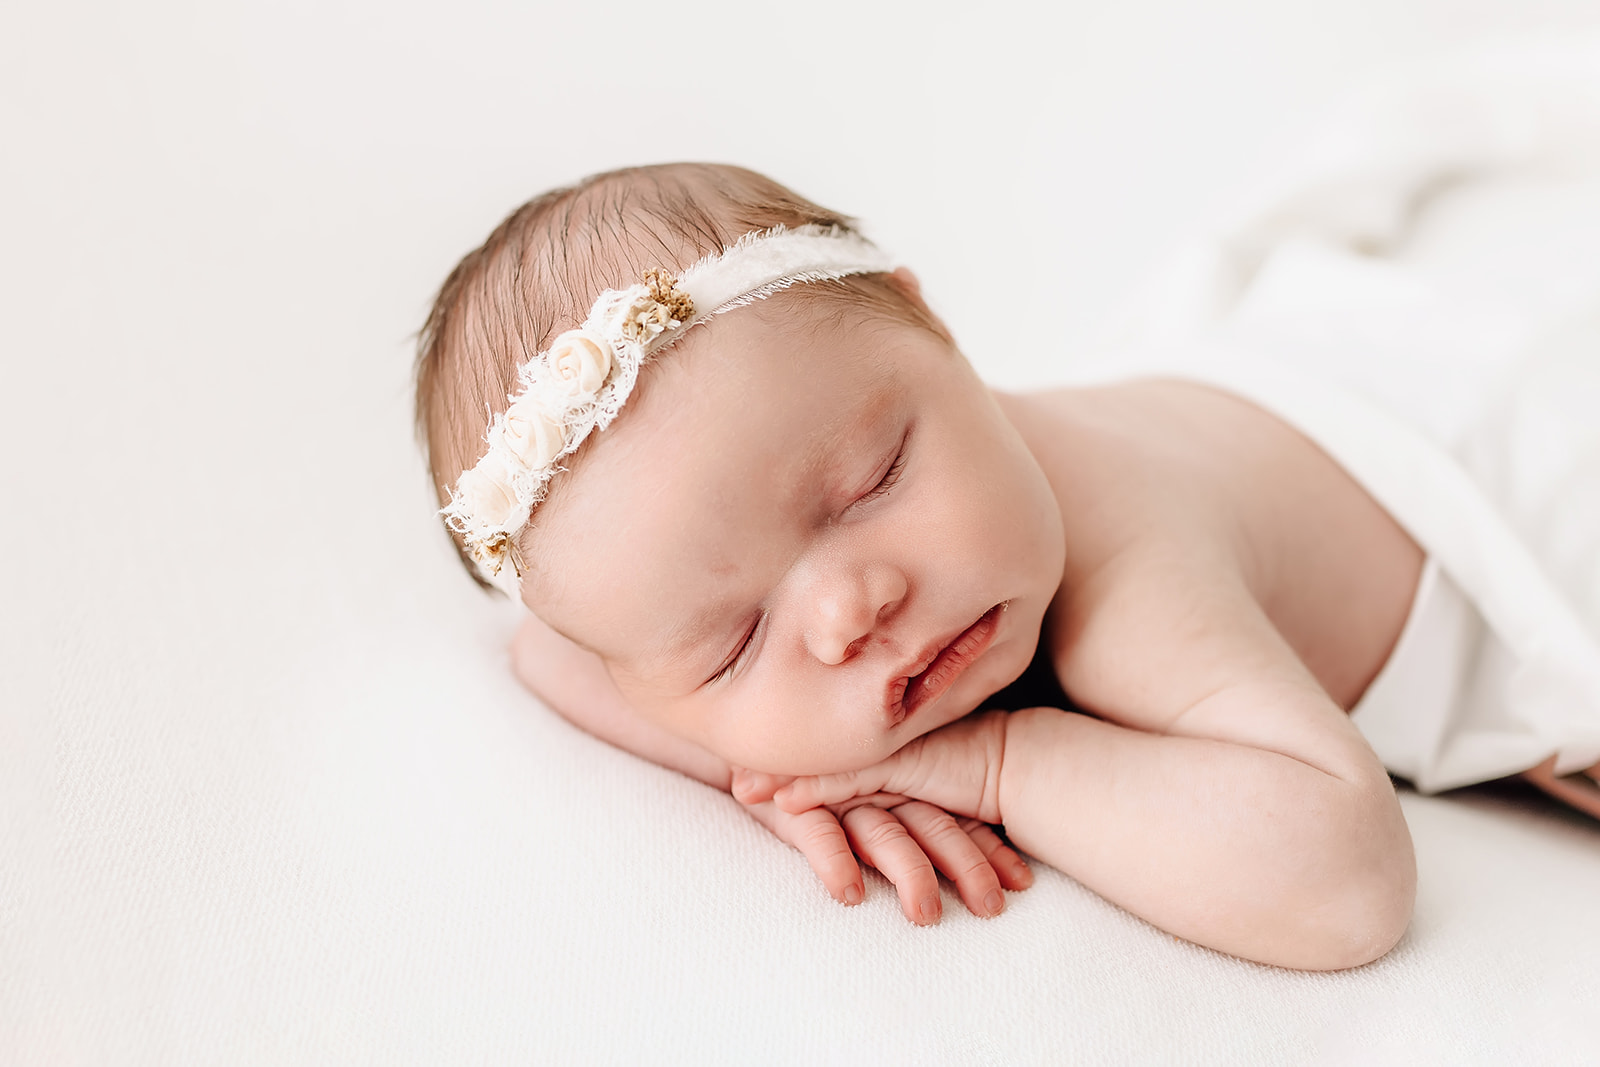 newborn baby sleeps on her hands wearing a white rose headband honeycomb st louis